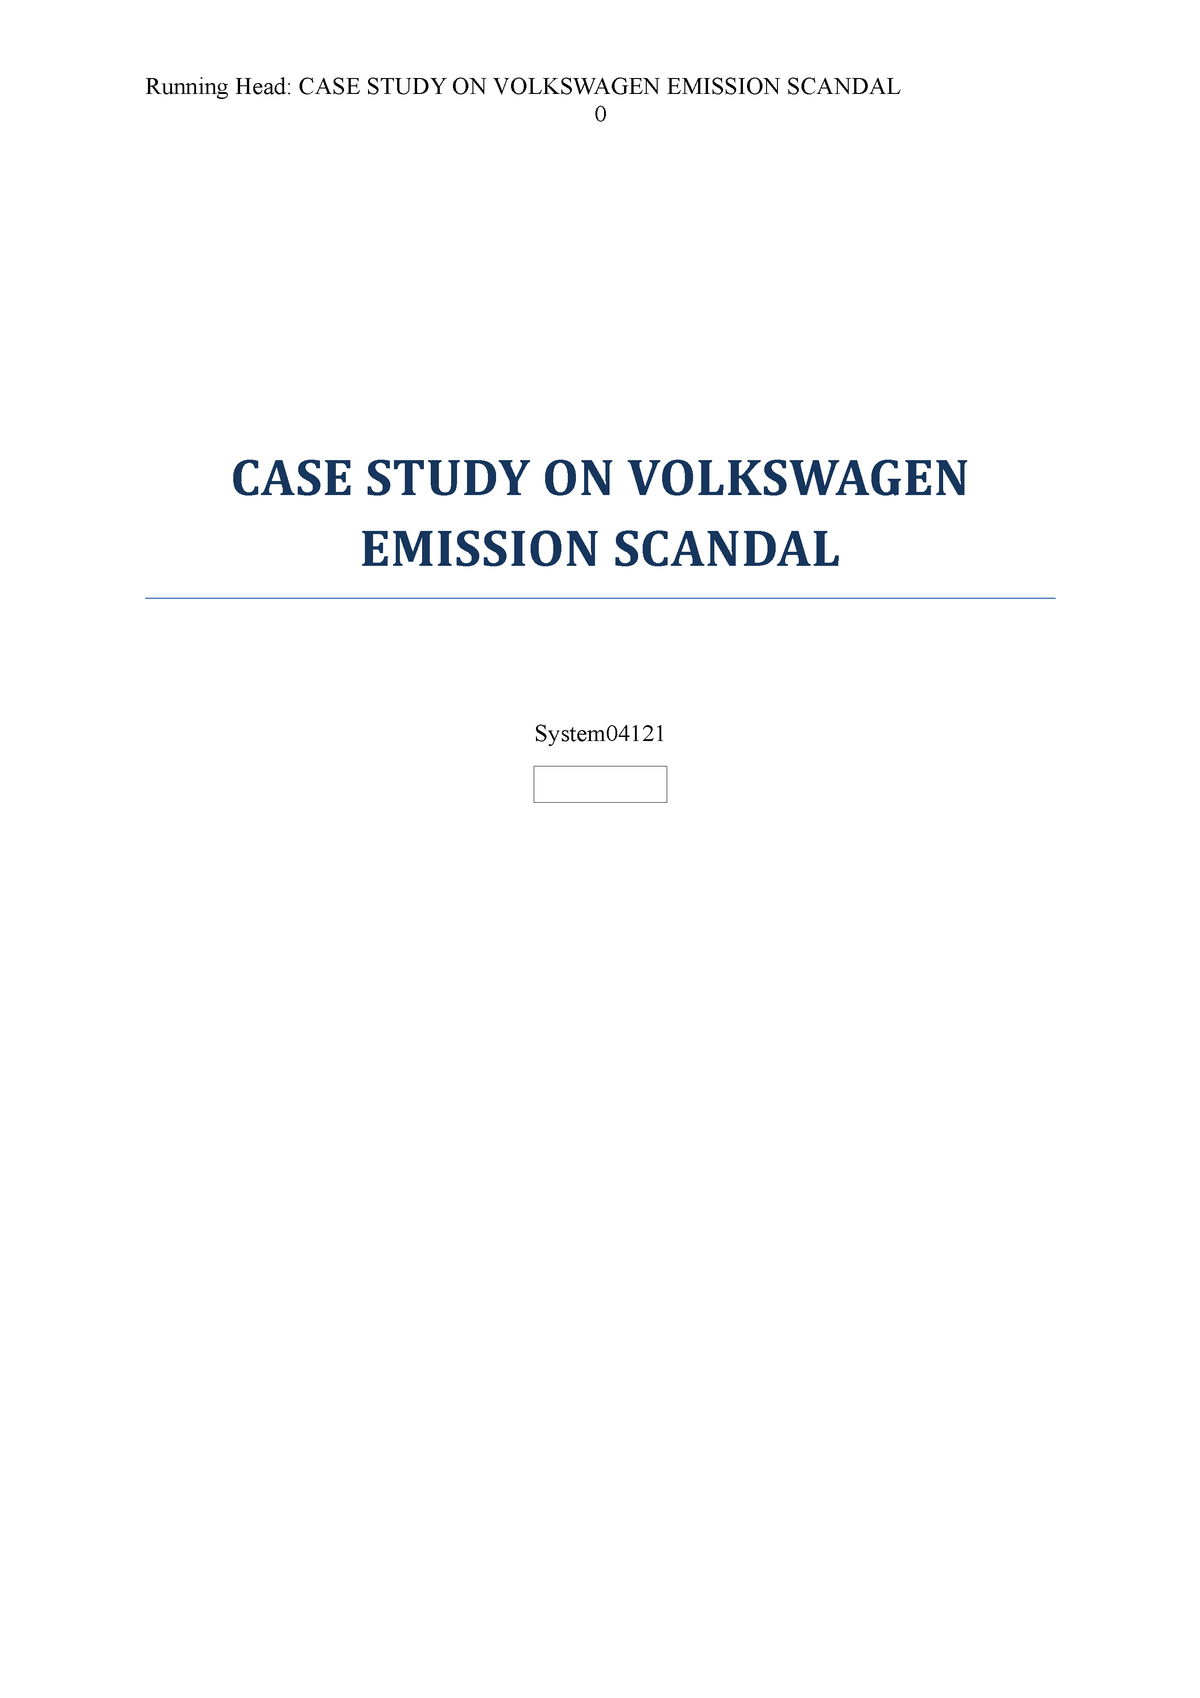 Volkswagen case study document reference - Running Head: CASE STUDY ON  VOLKSWAGEN EMISSION SCANDAL 0 - Studocu